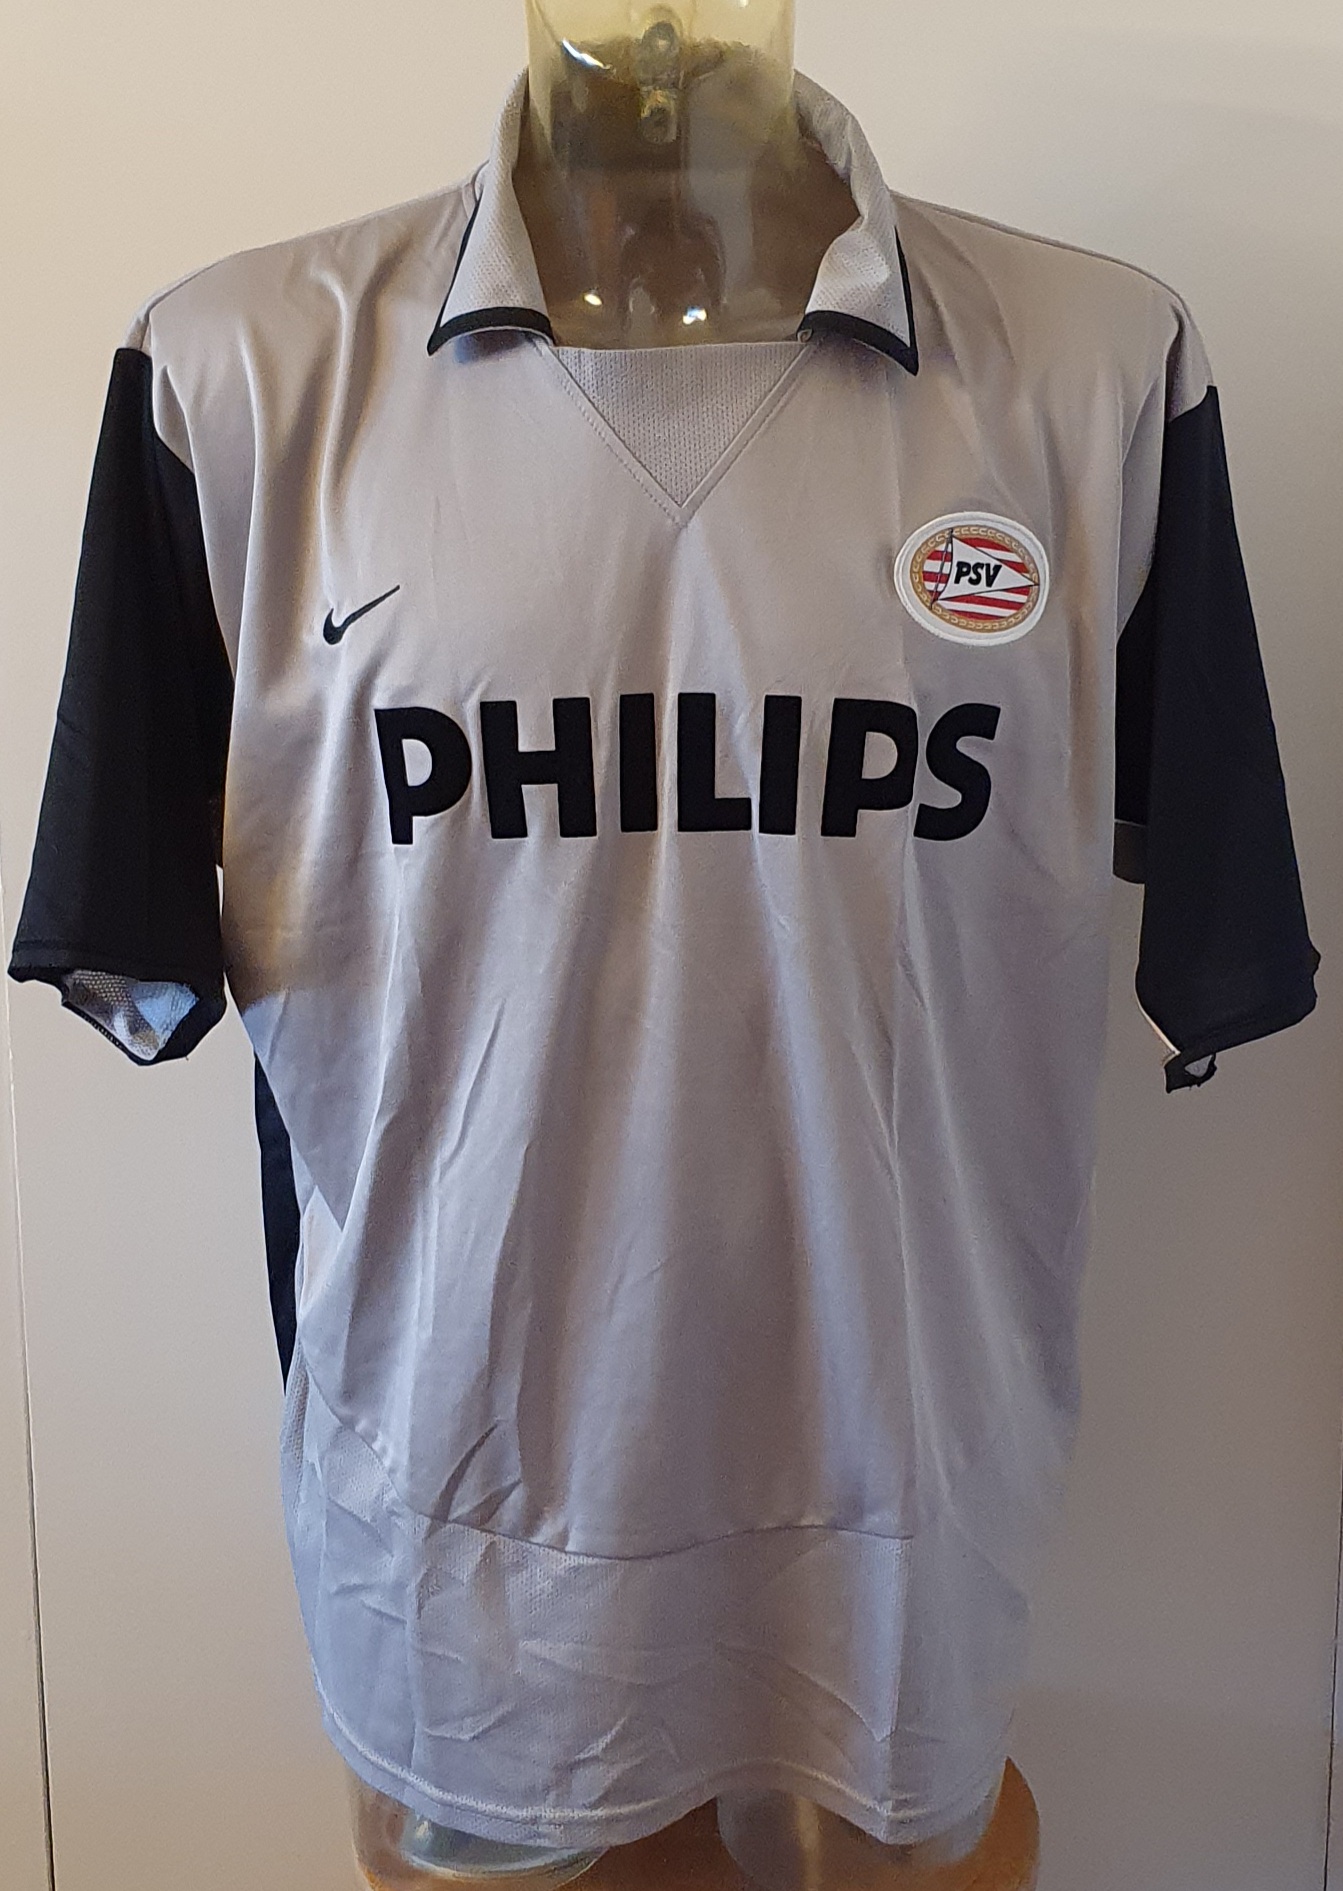 Pessimistisch Met bloed bevlekt consultant PSV uitshirt 2003-2005, maat XXL | Shirtpaleis